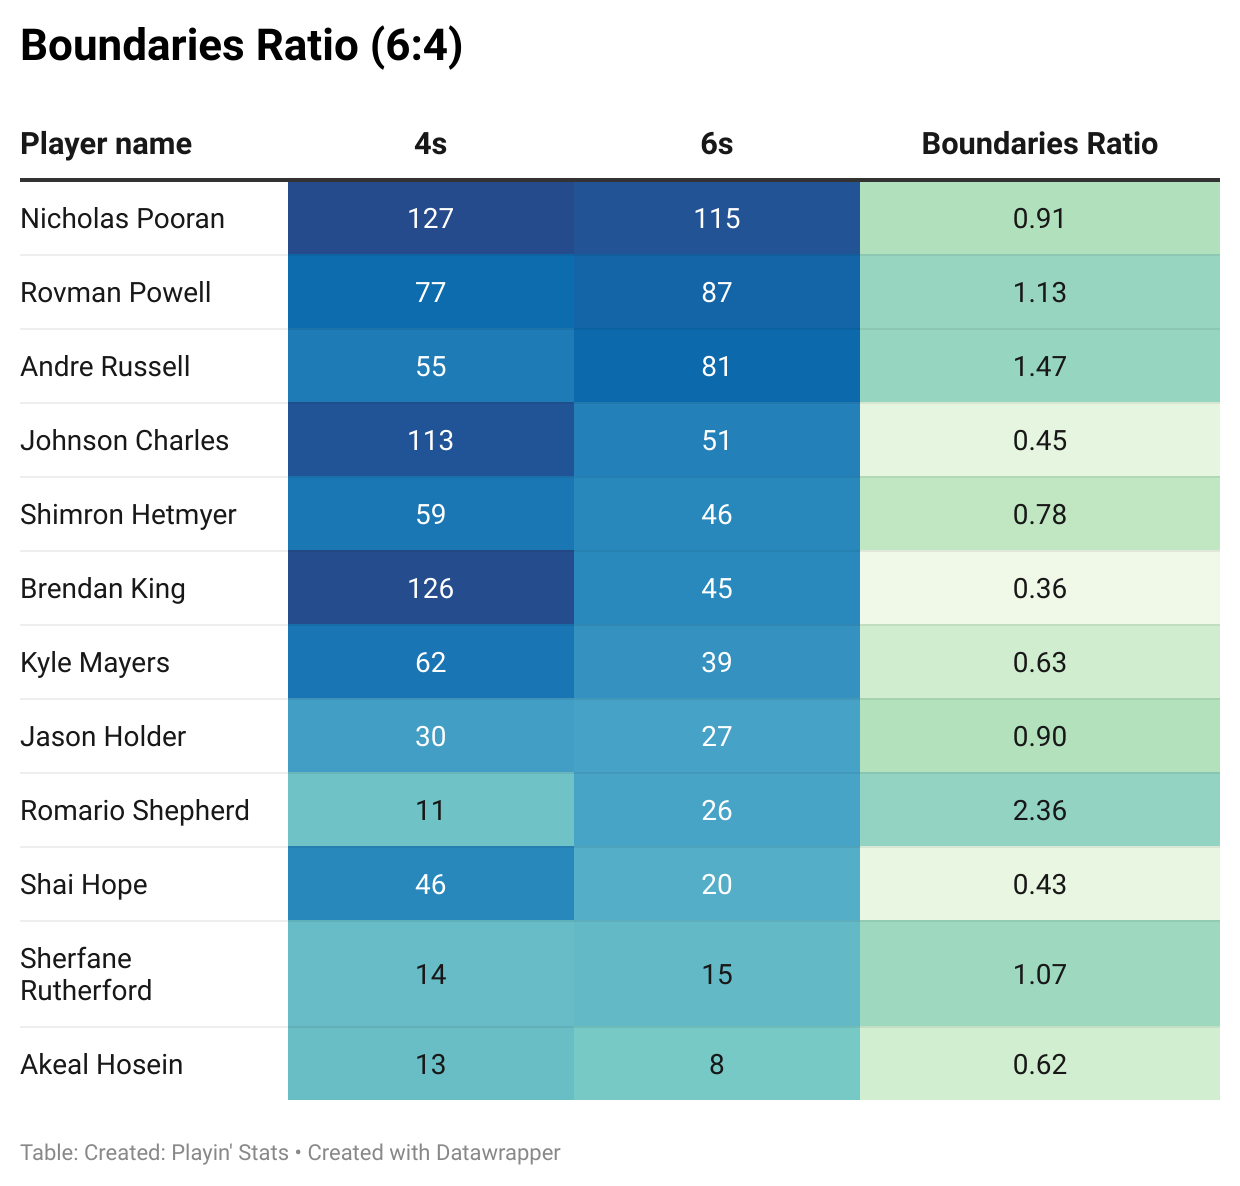 Ratio of boundaries (6:4)